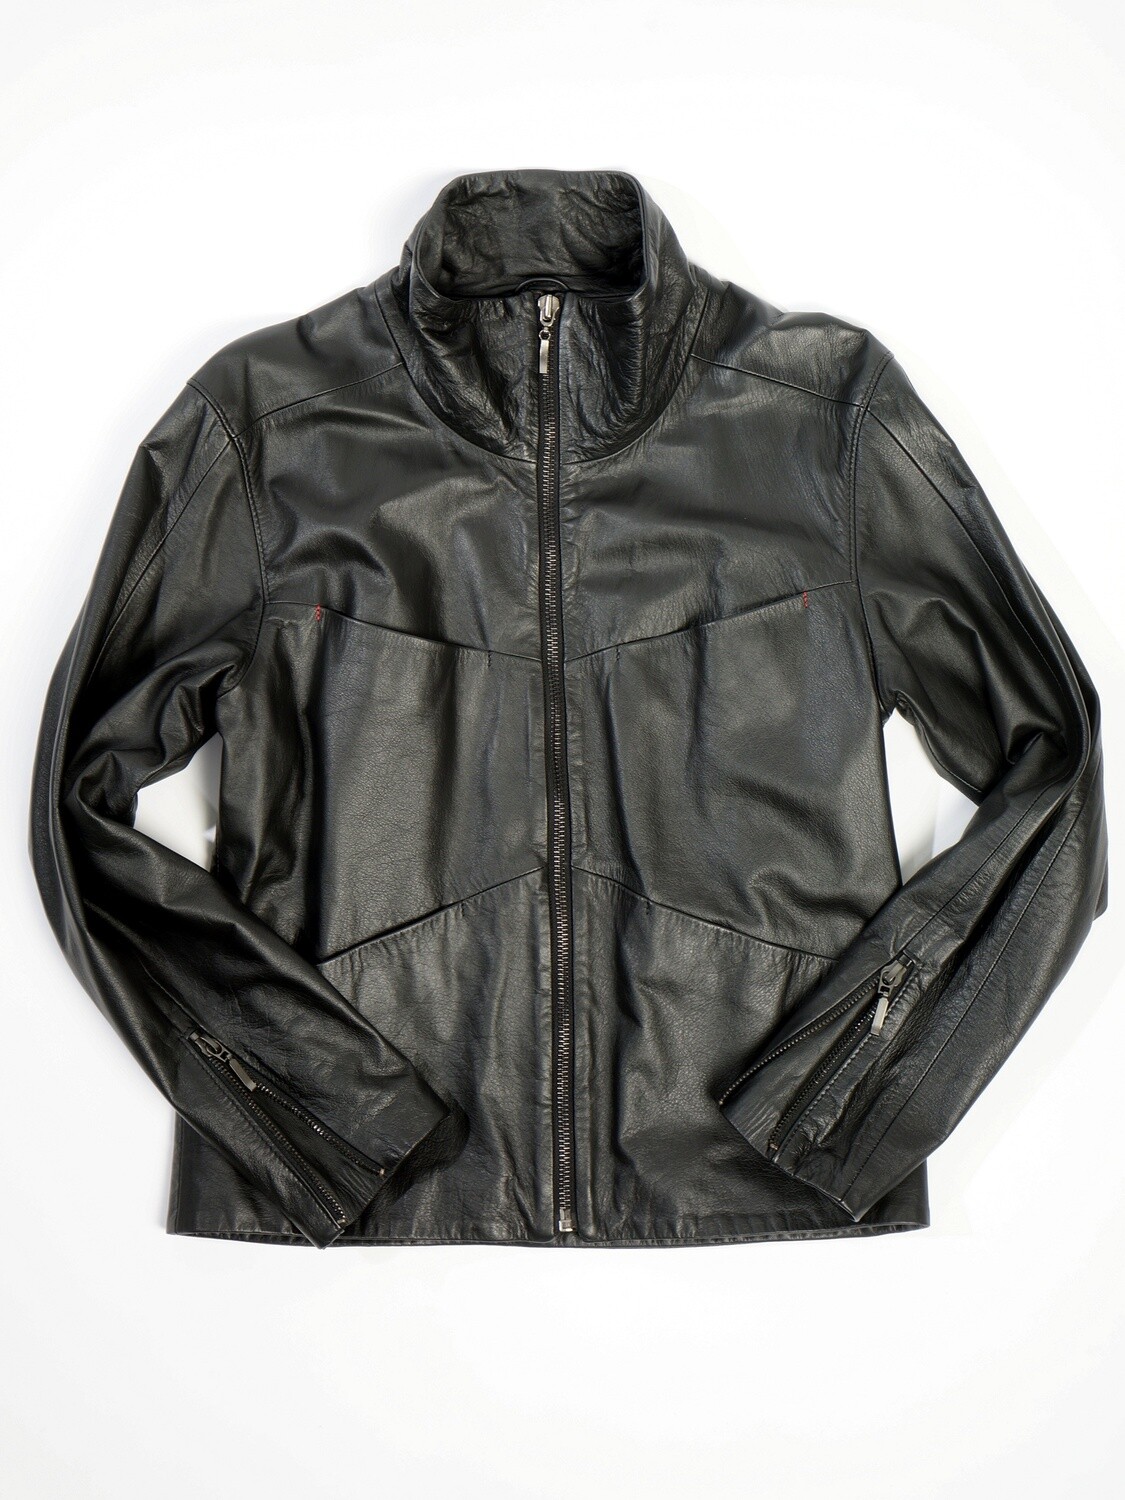 Black Leather Man Jacket Fout Pockets